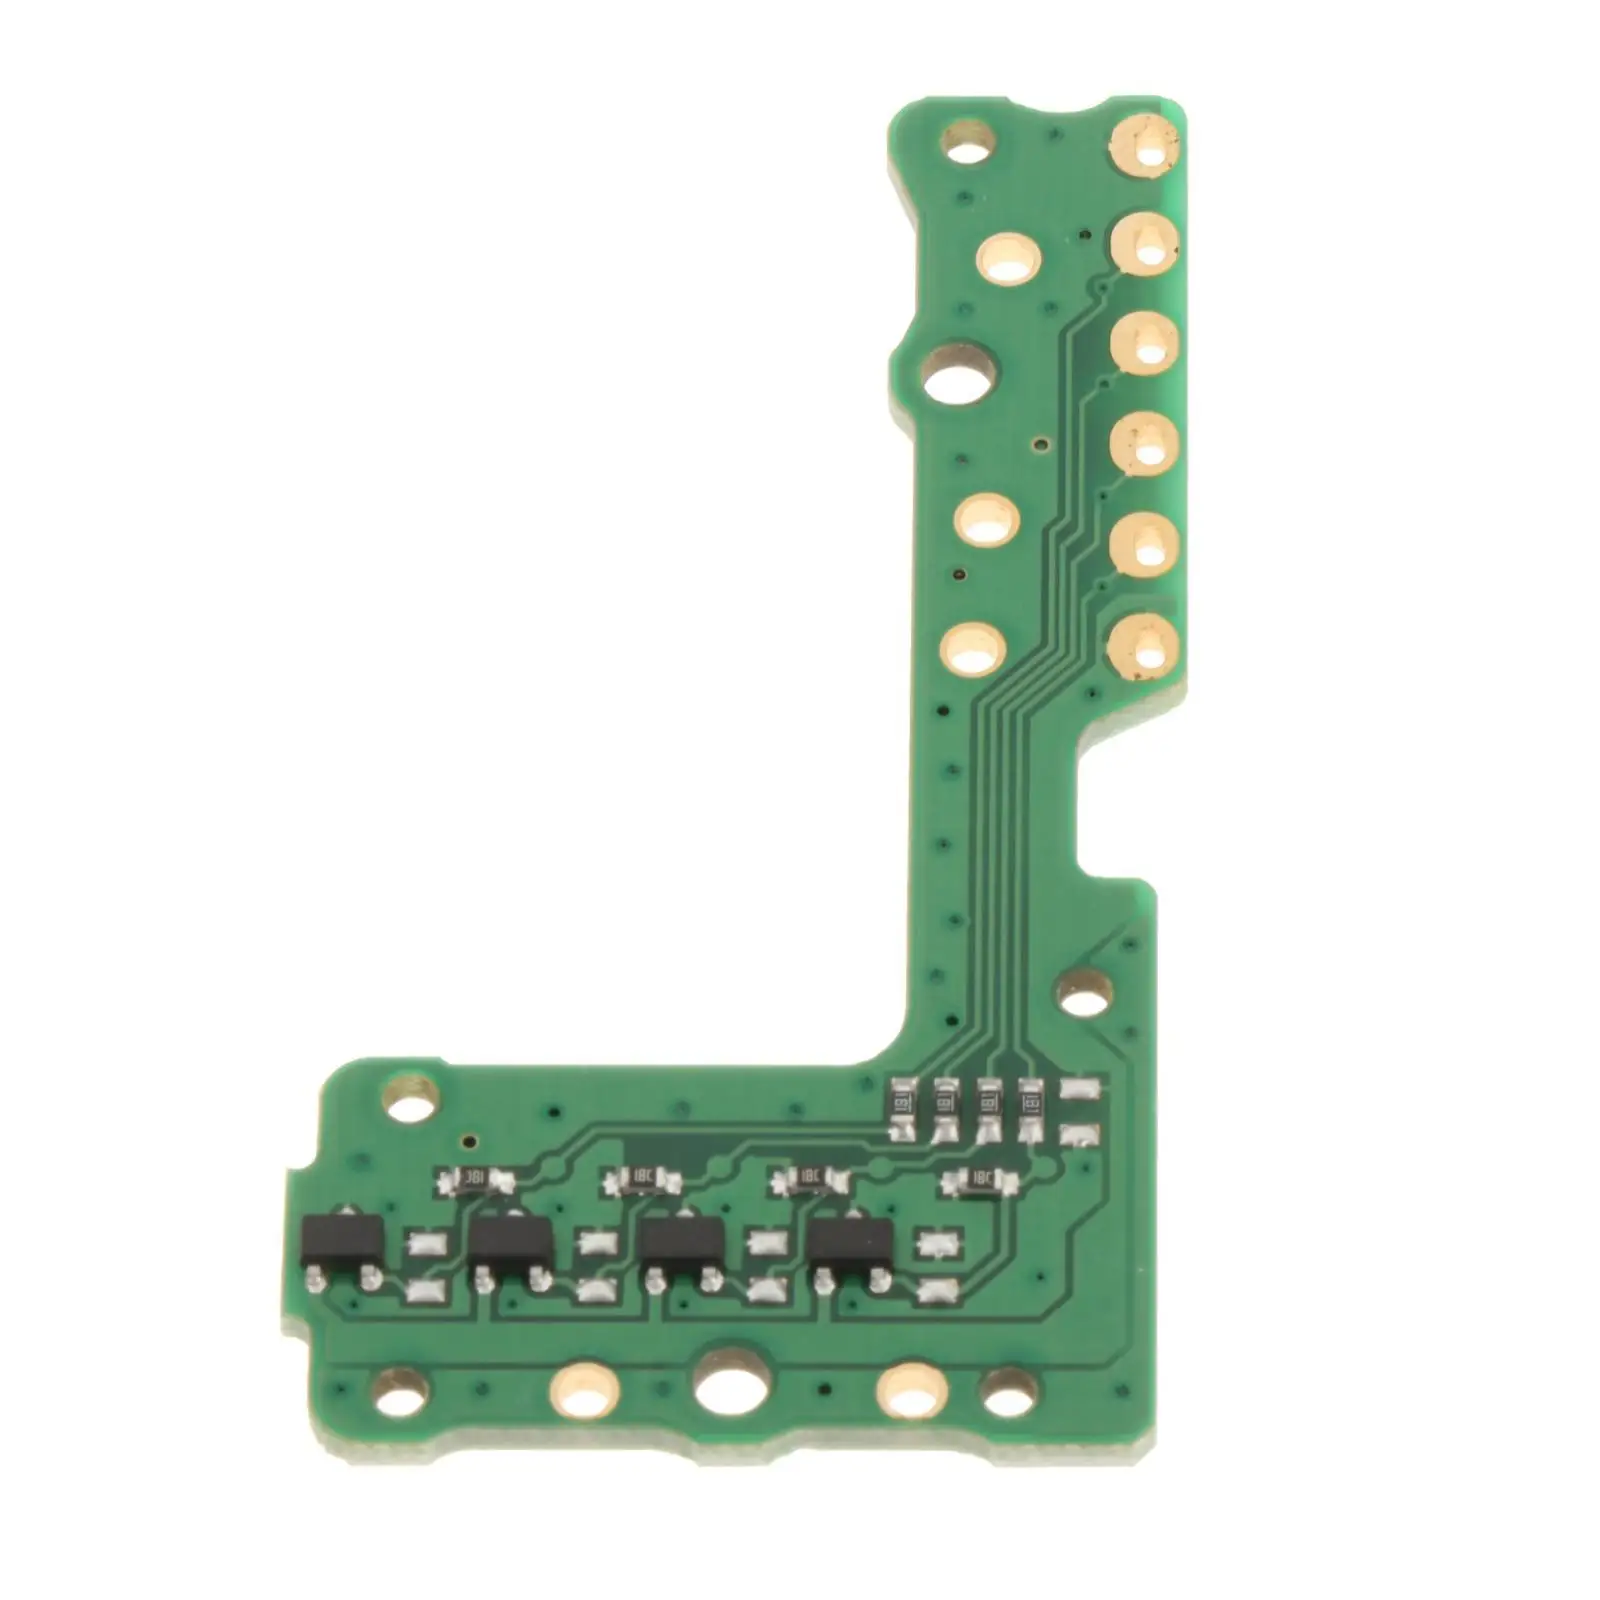 Automatic Transmission Gear Sensor Repair Board, for , HP21, Professional